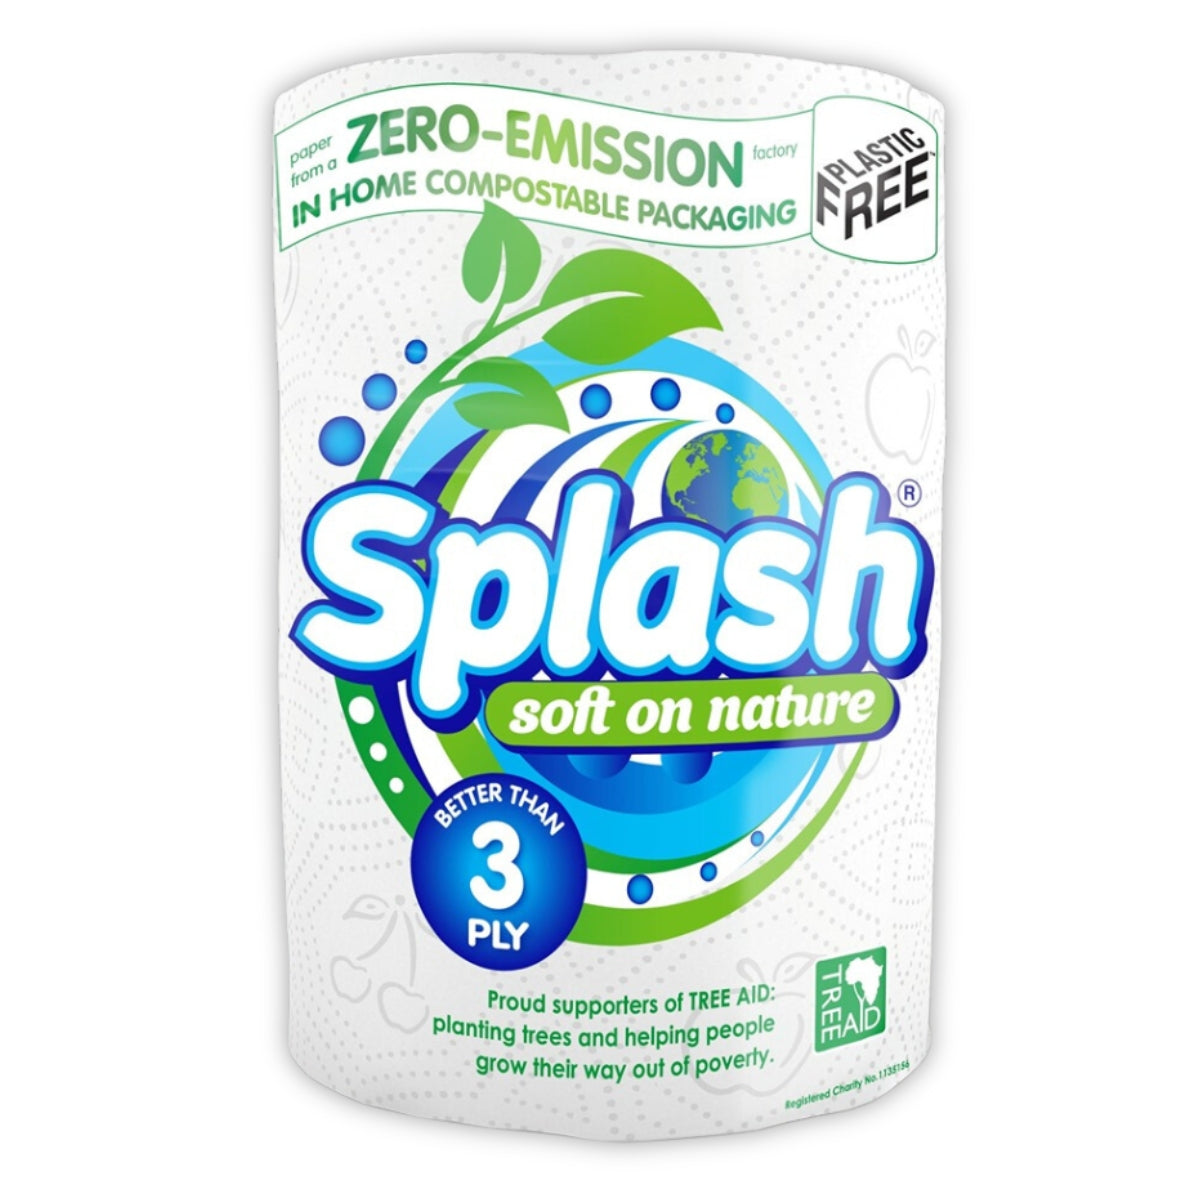 Splash soft on nature toilet paper.